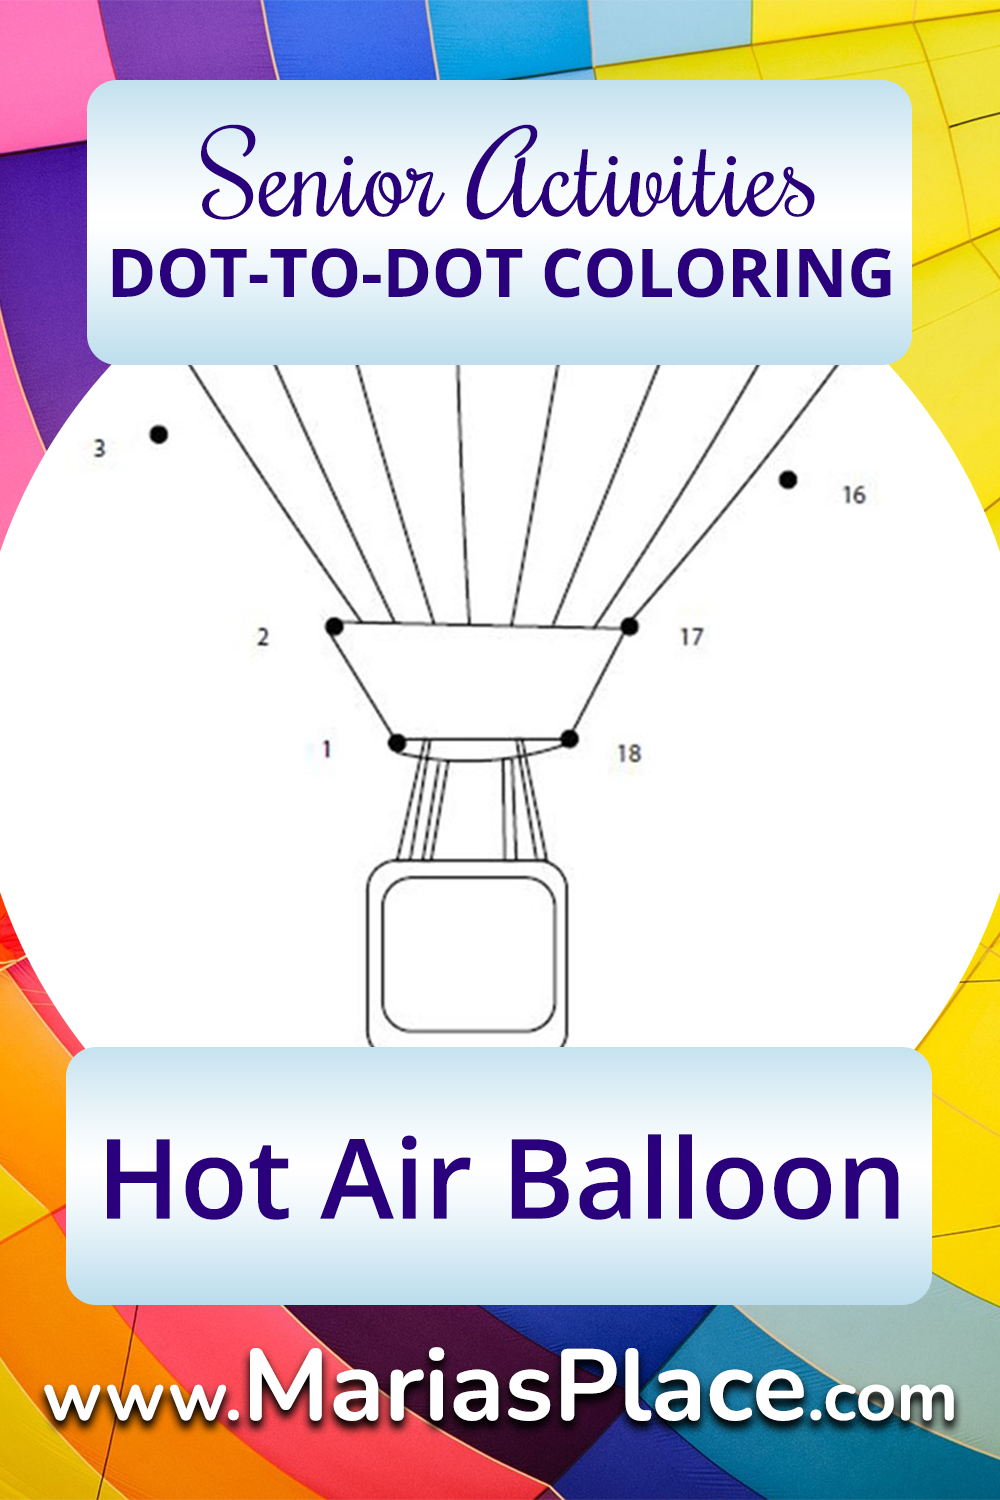 Dot-to-dot, Hot Air Balloon